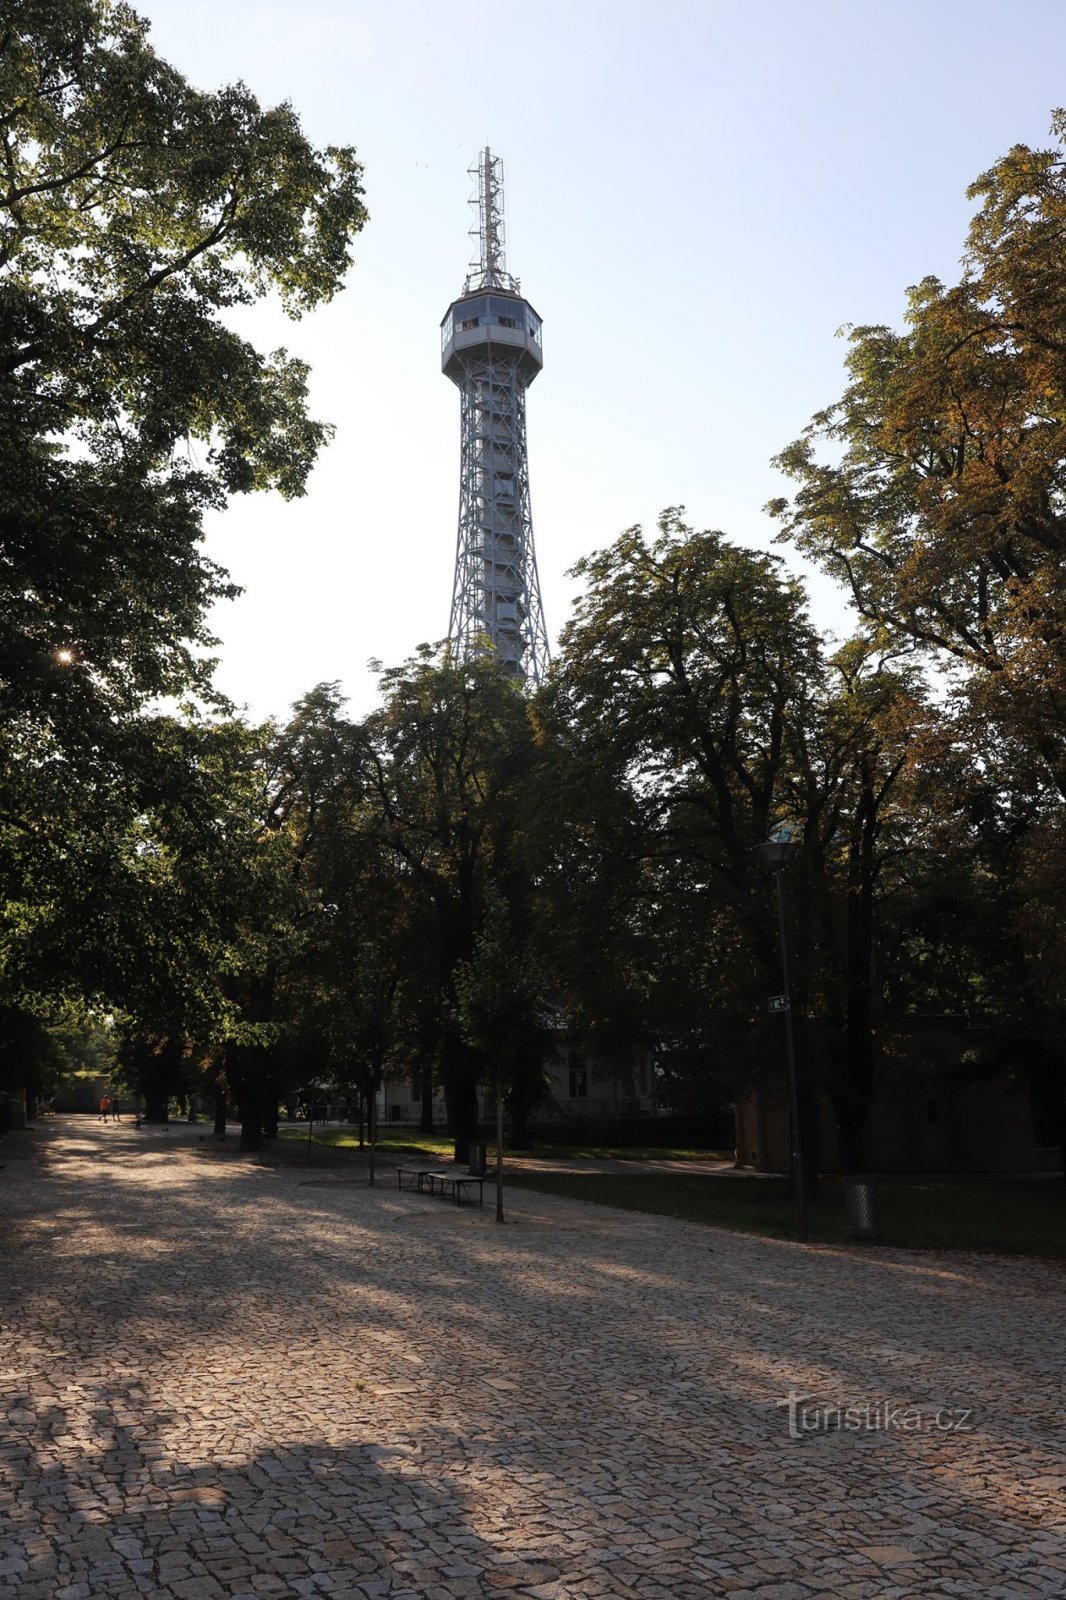 Park at the Petřín lookout tower